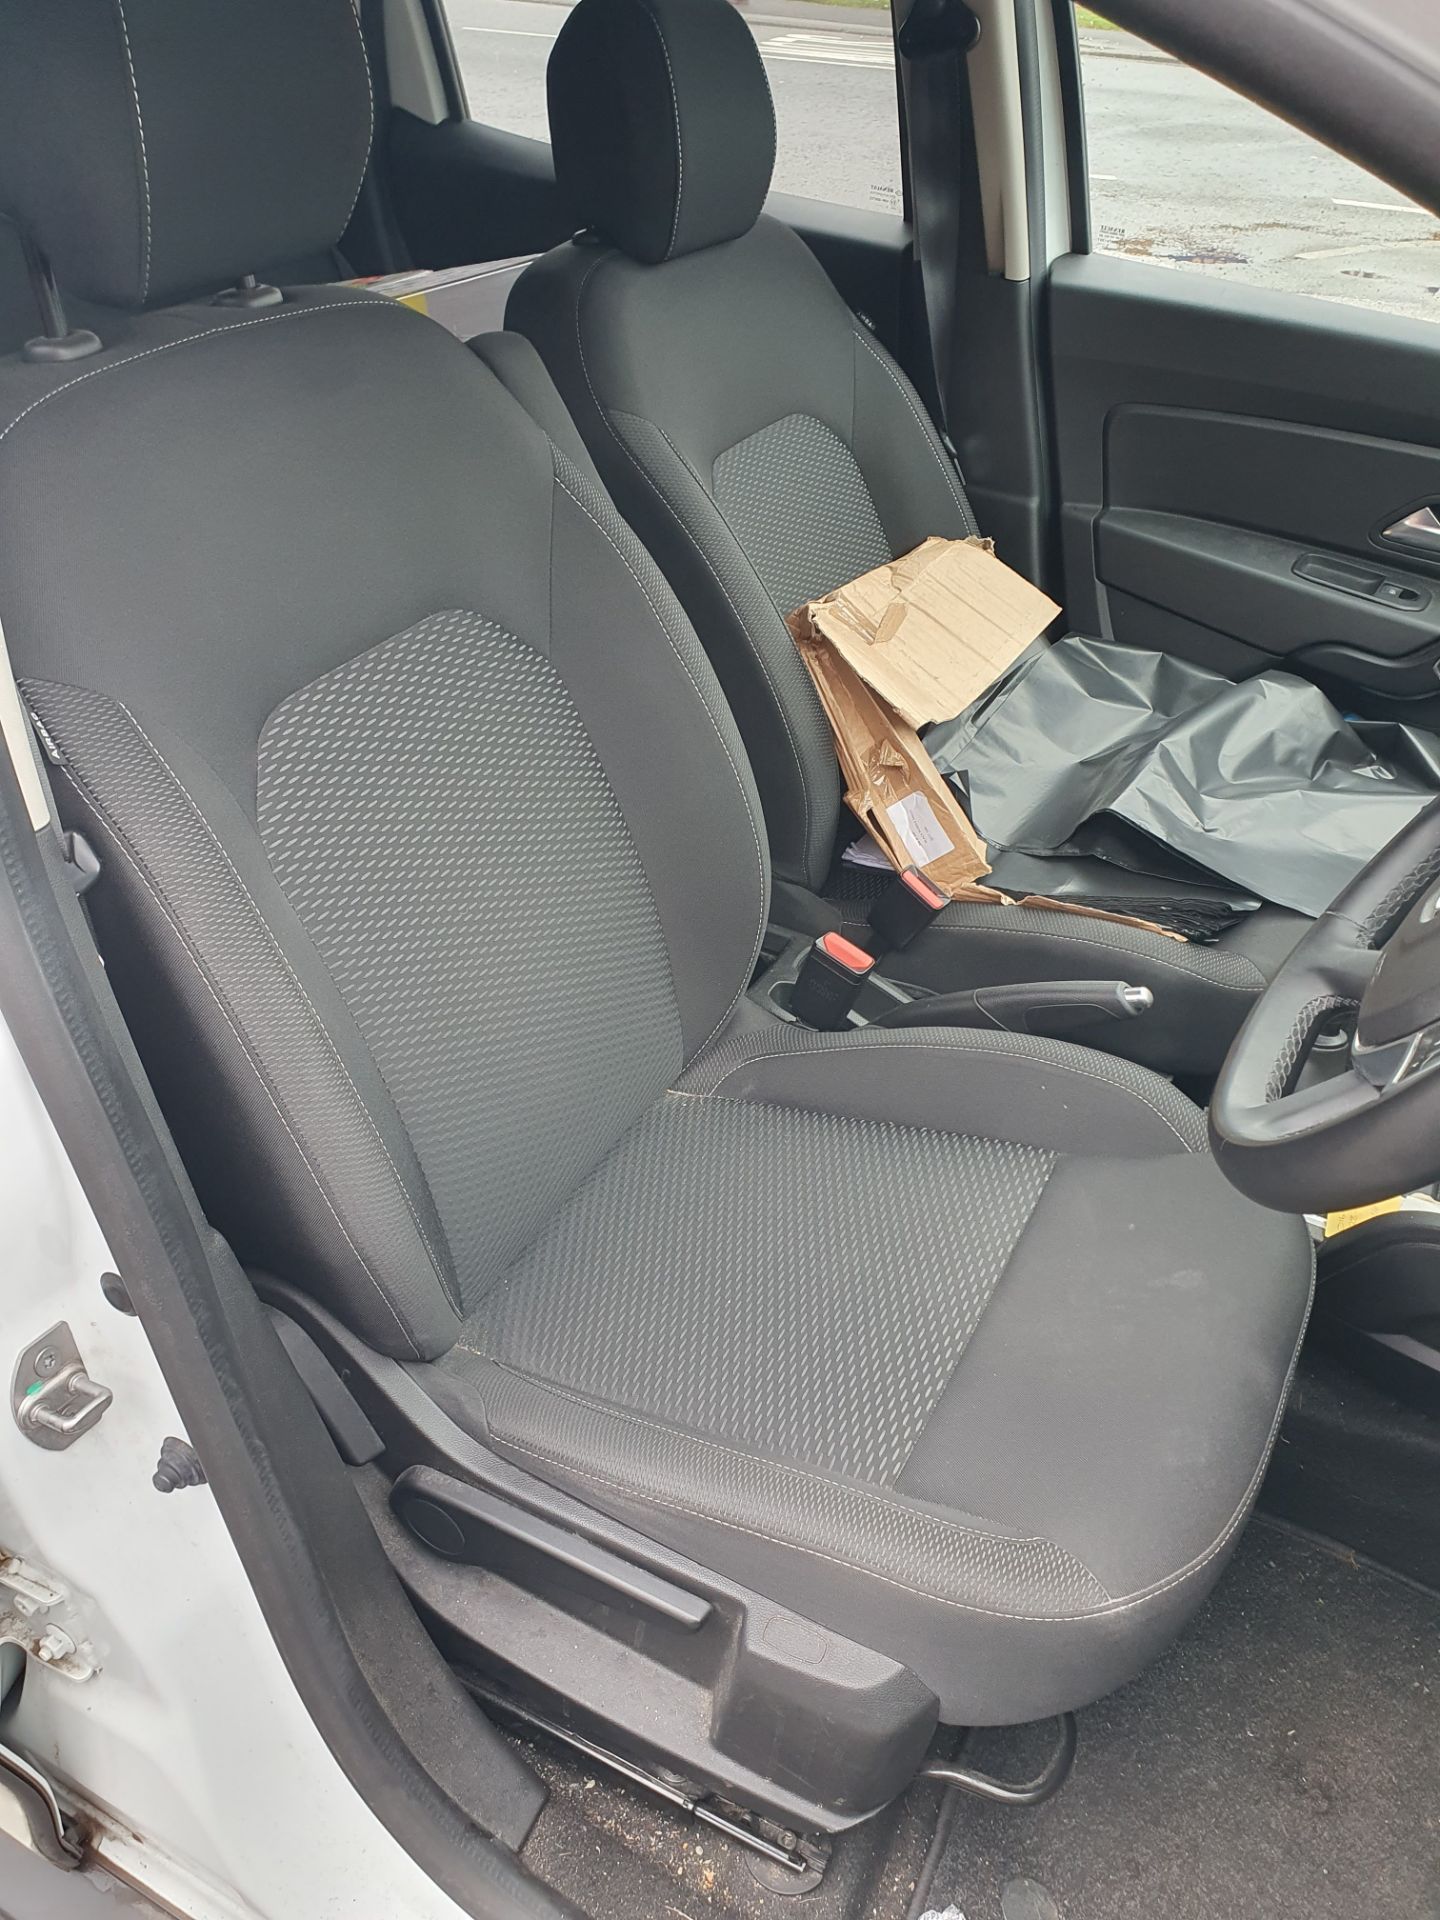 Dacia Duster Comfort TCE 4x2 5 Door Hatchback | MJ70 ENL | White | Manual | 21,290 Miles - Image 11 of 16